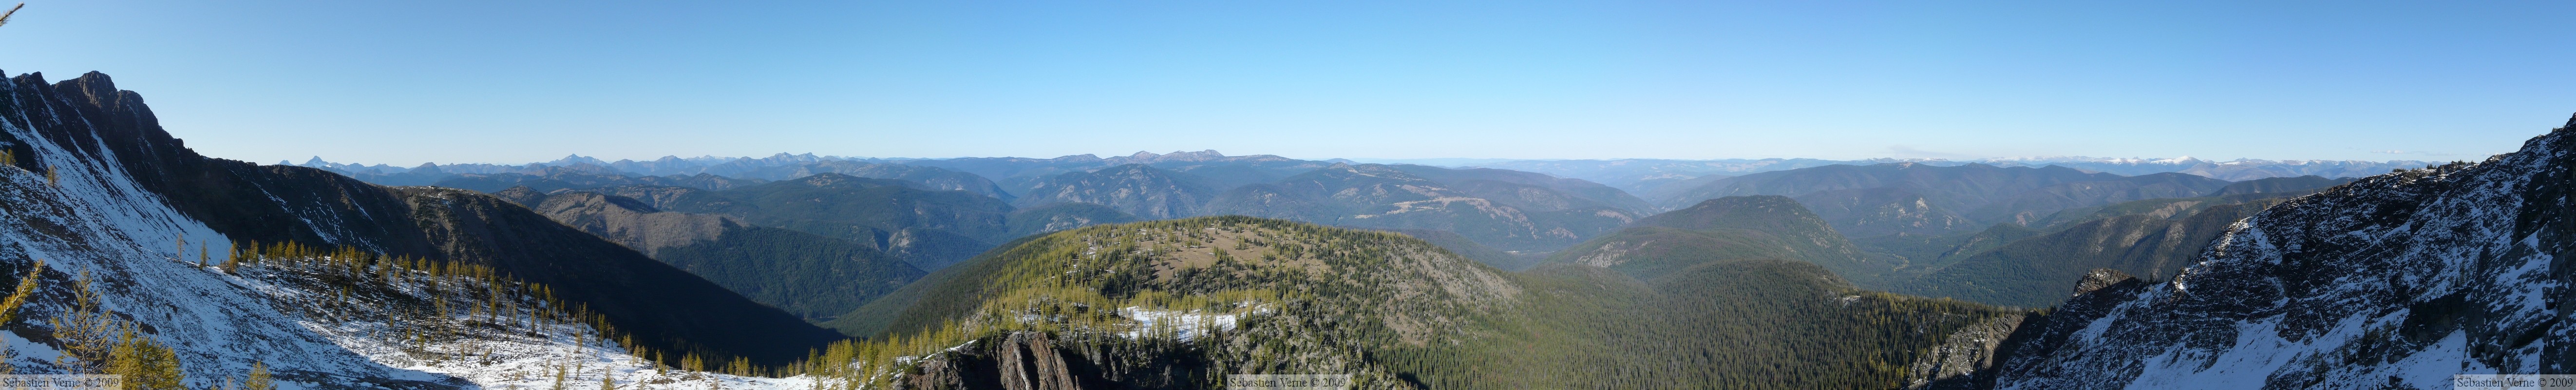 Frosty Mountain panorama 7.jpg